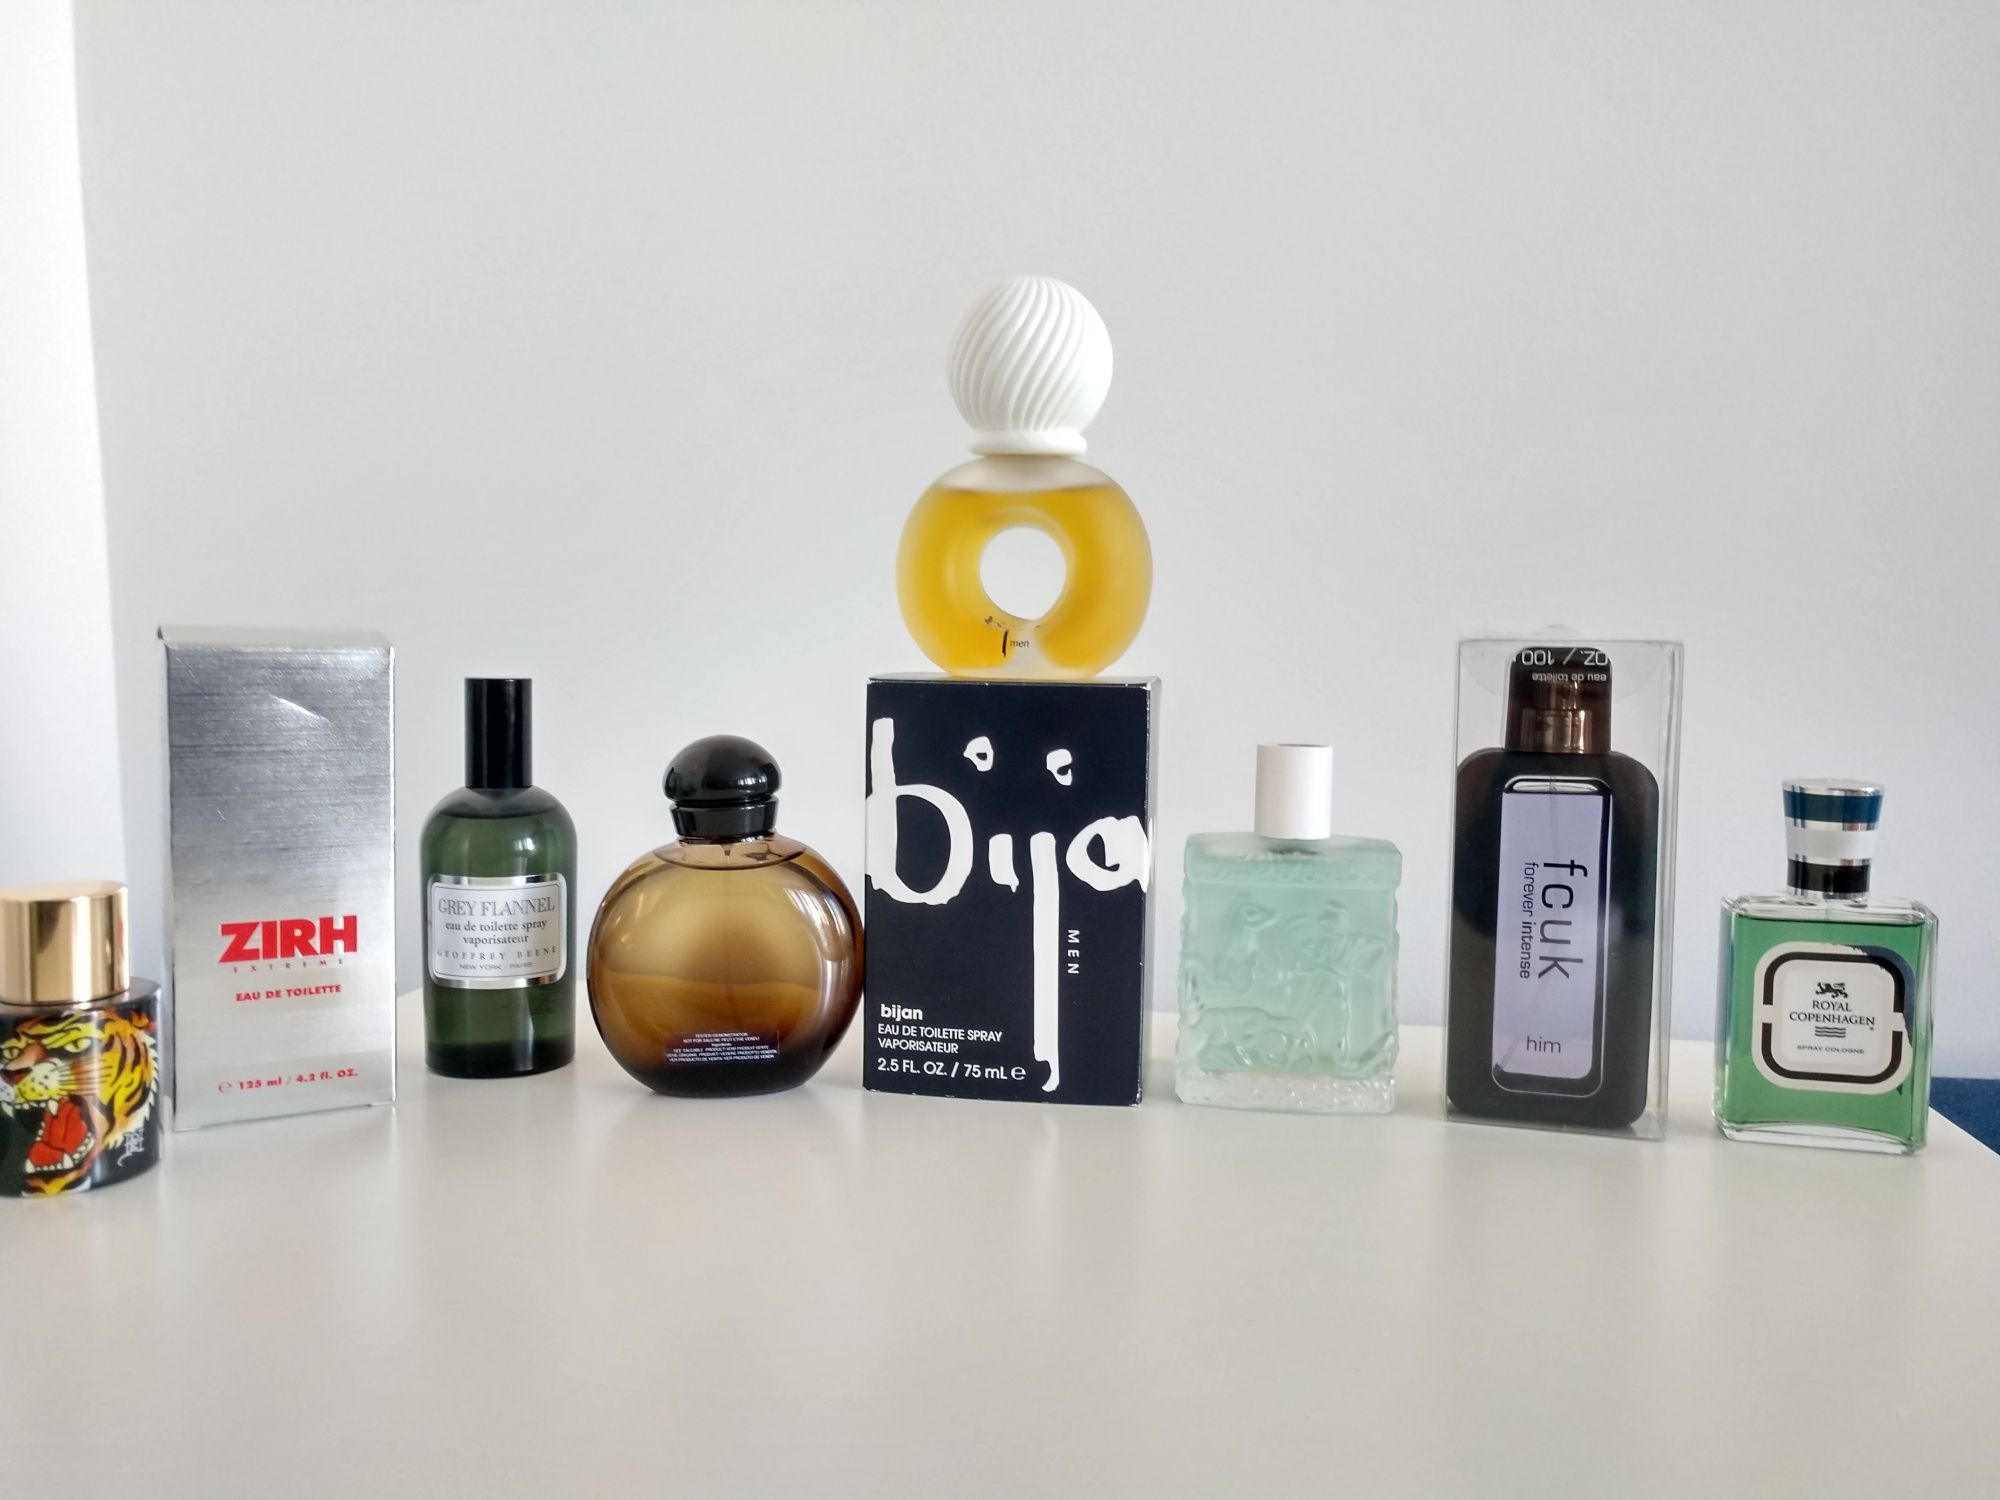 100% Американские парфюмы из США Подарок мужчинам Ароматы Made in US.A